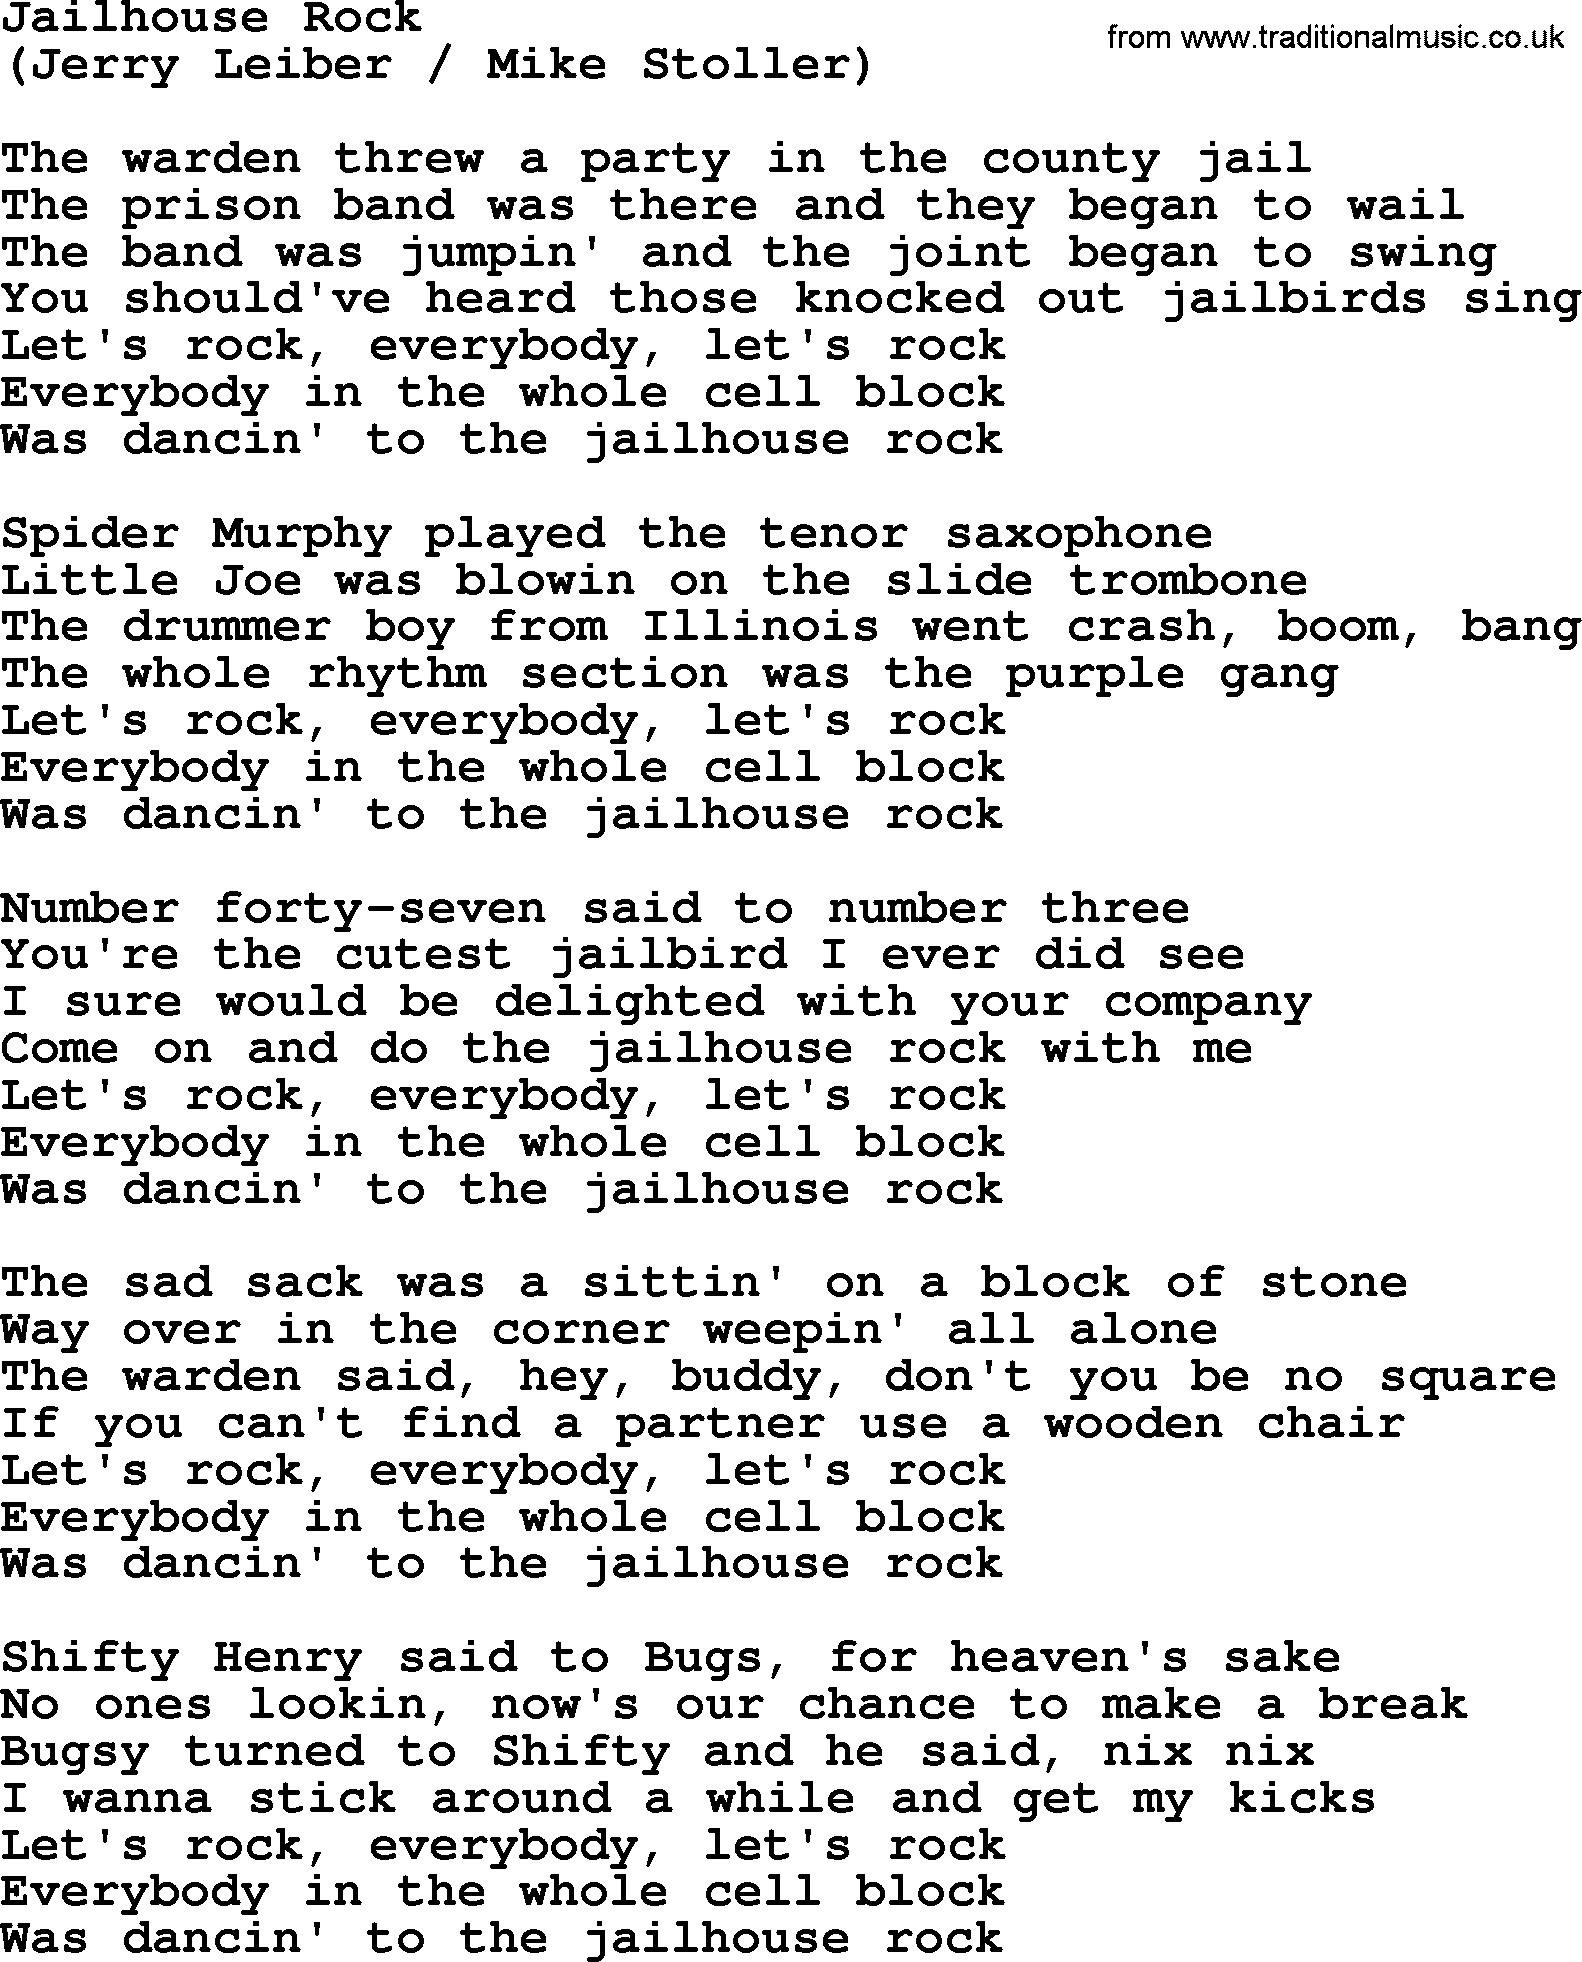 The Byrds song Jailhouse Rock, lyrics